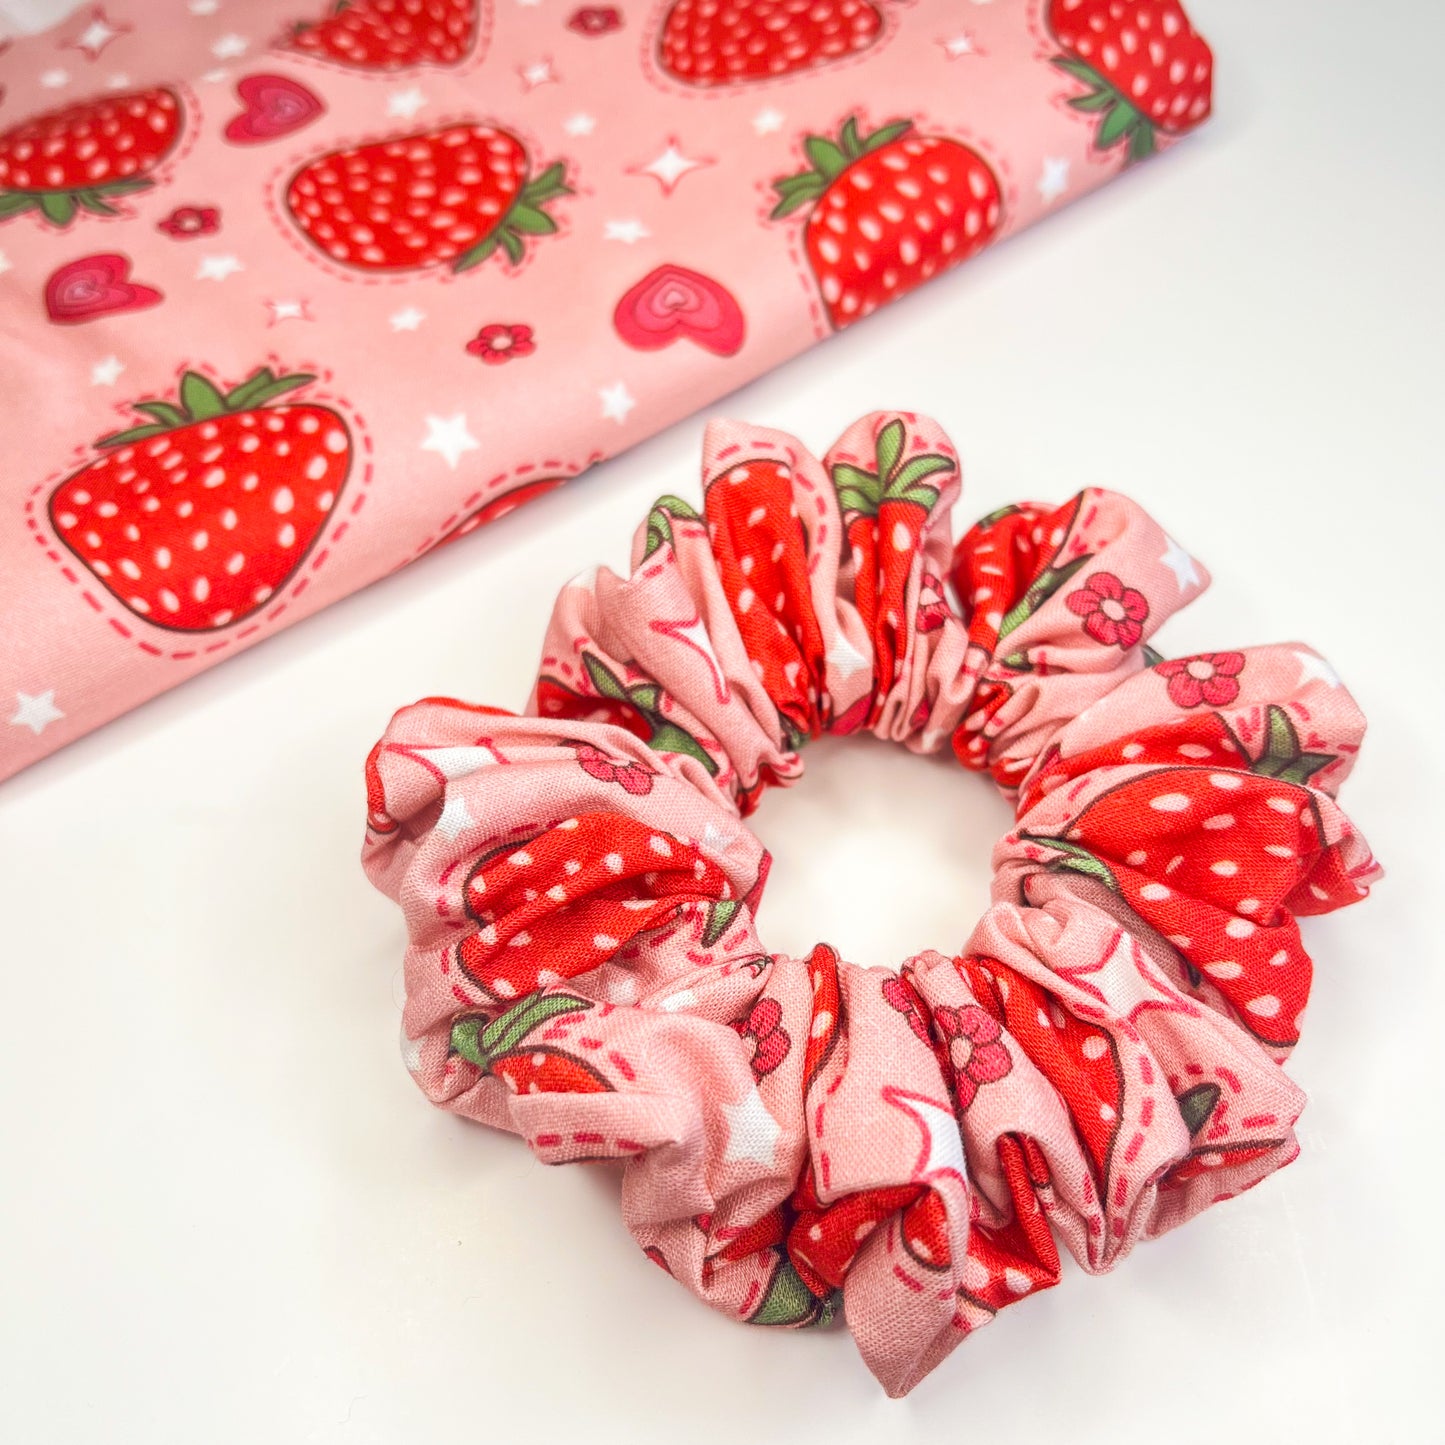 Strawberry bundle